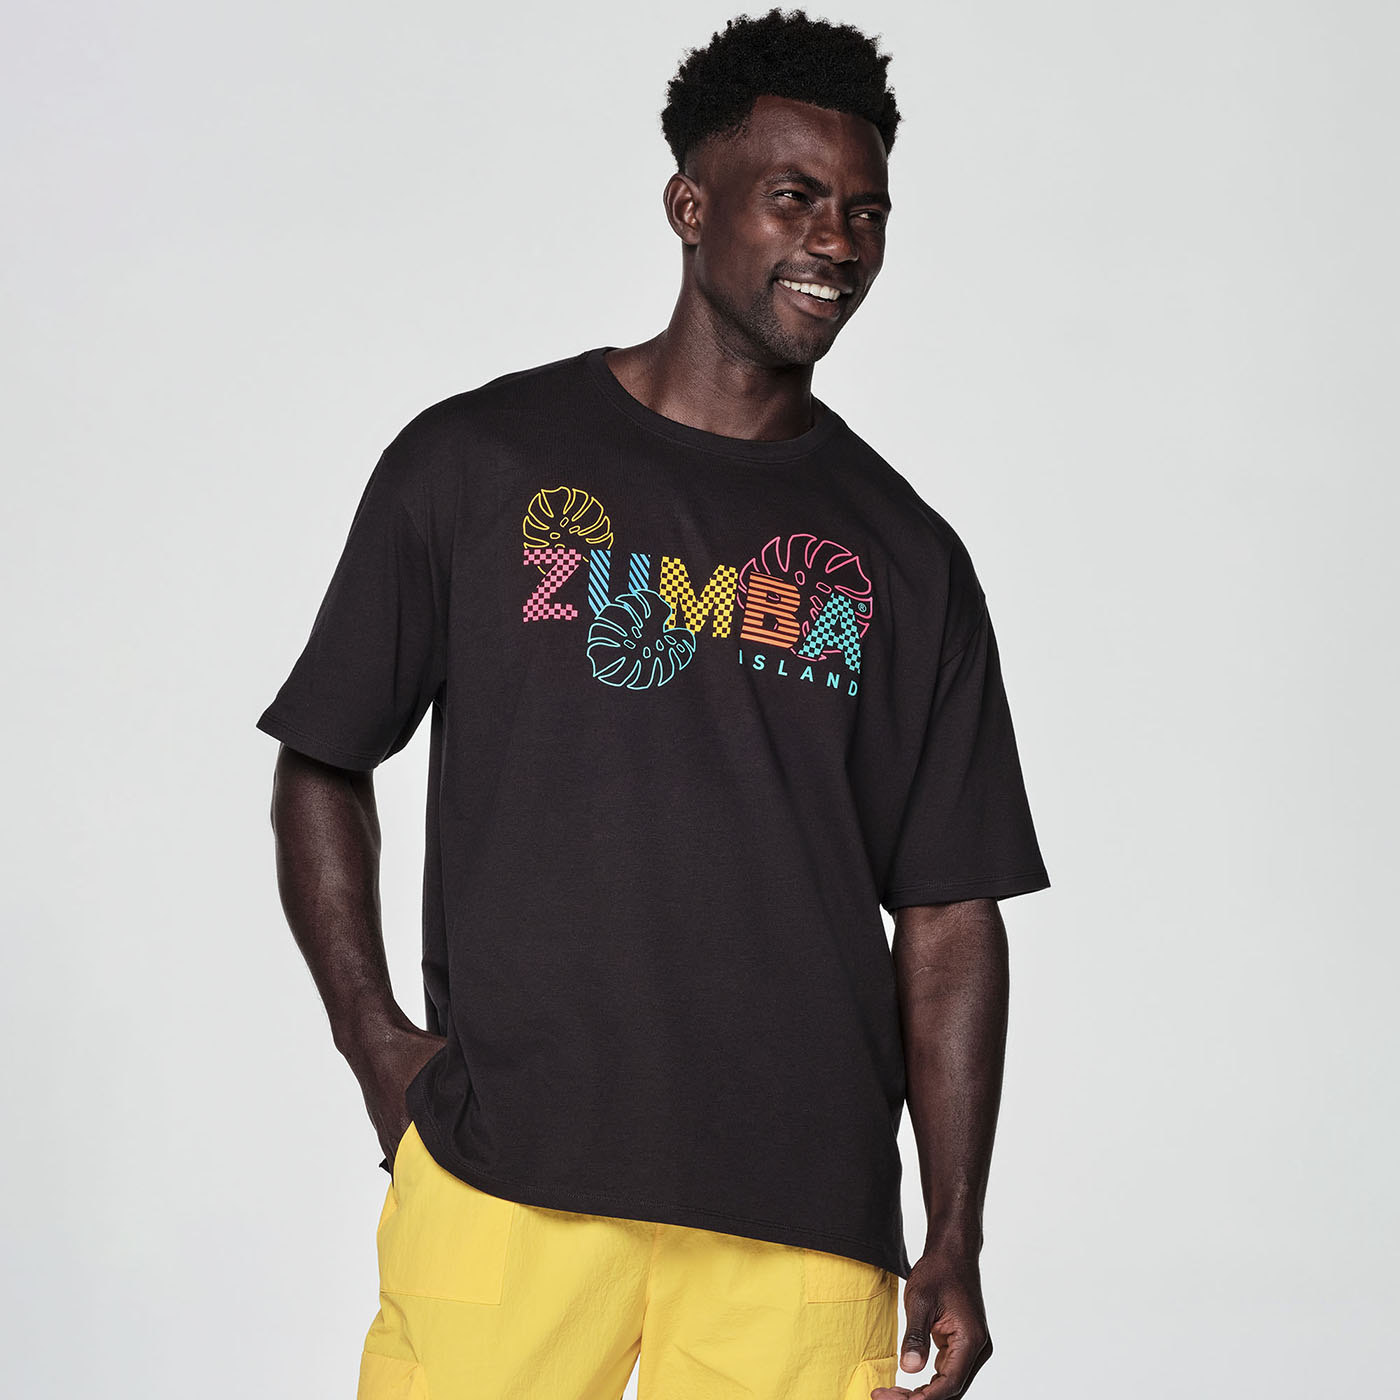 ZUMBA ズンバ 正規品 Tシャツ BLACK XSサイズ Sサイズ Mサイズ Lサイズ-フィットネスウェアのセレクトショップ LA BODY